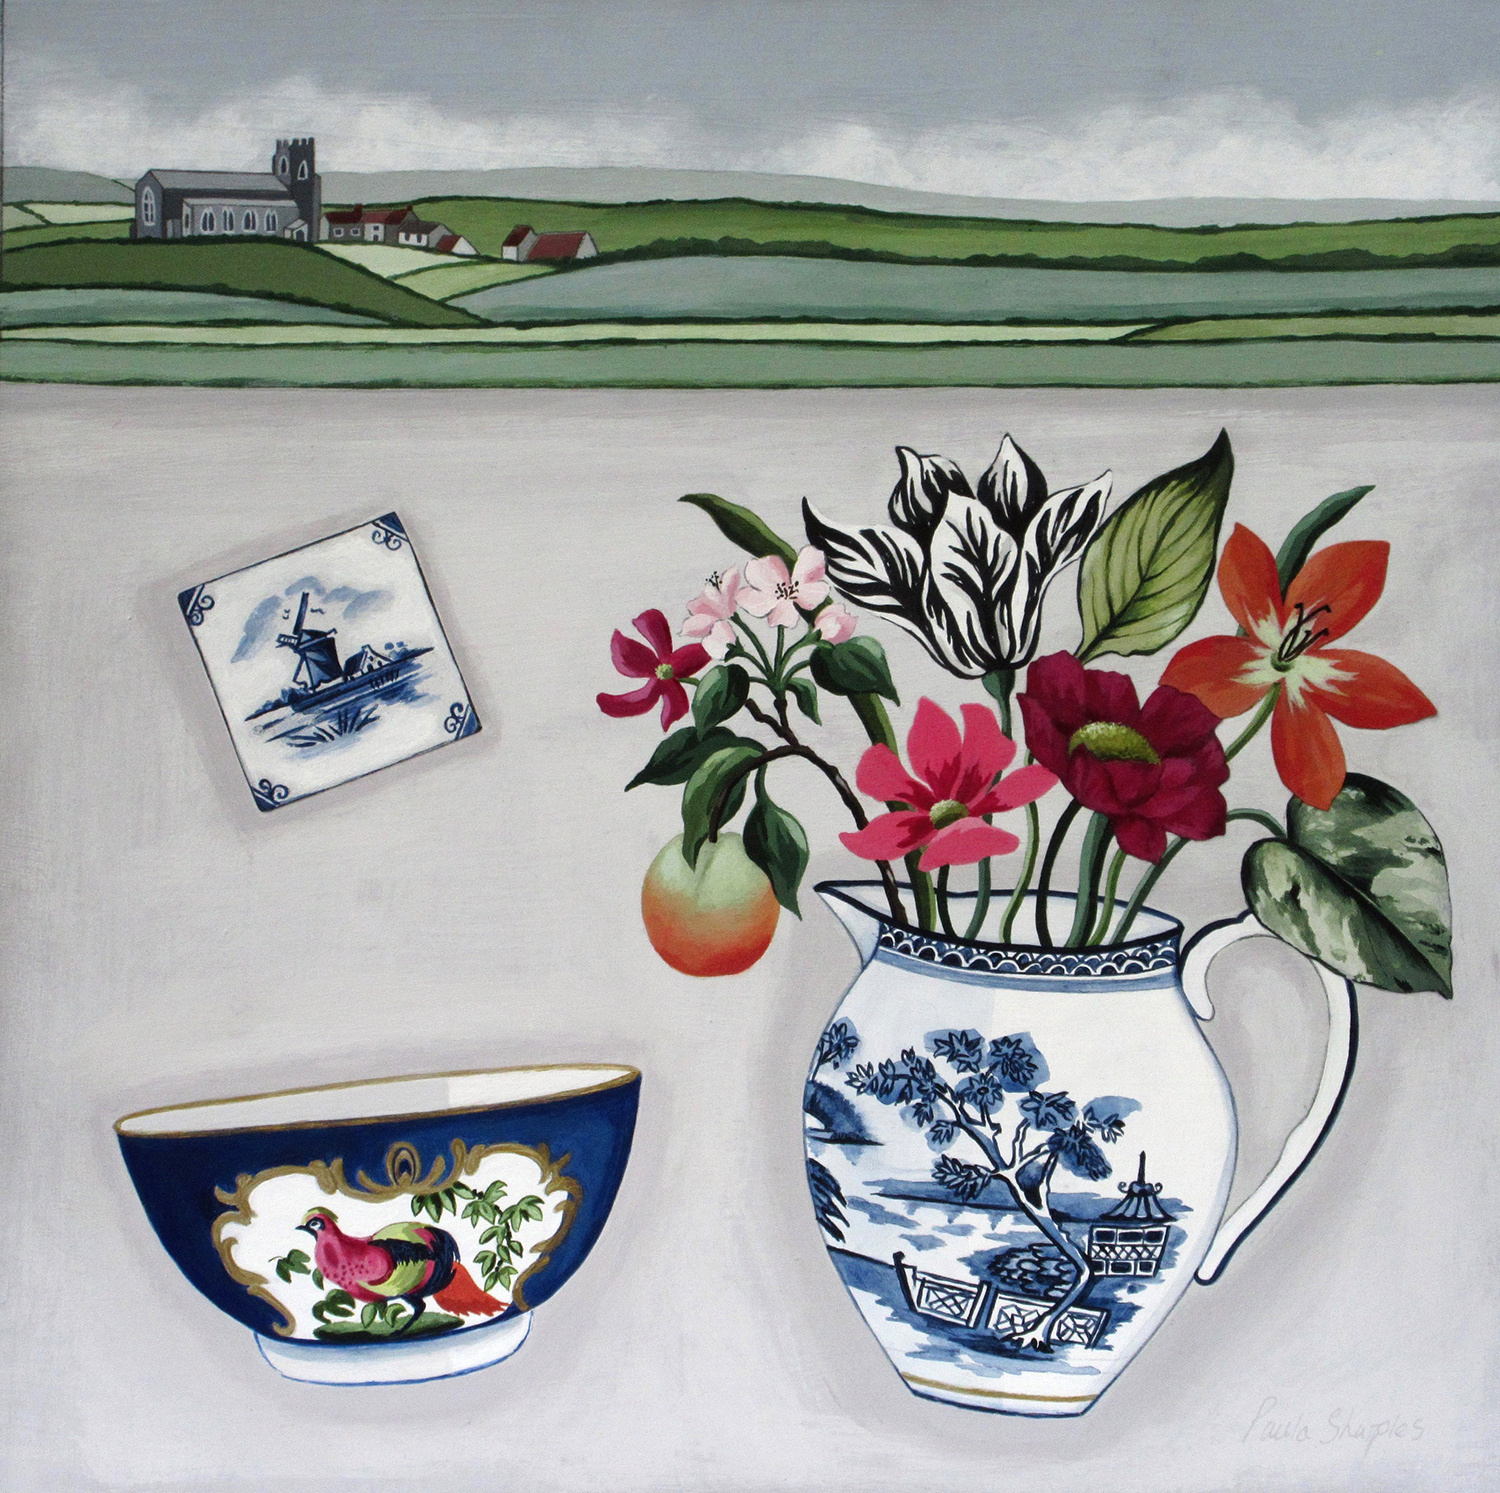 Worcester Bowl in a Norfolk Landscape by Paula Sharples